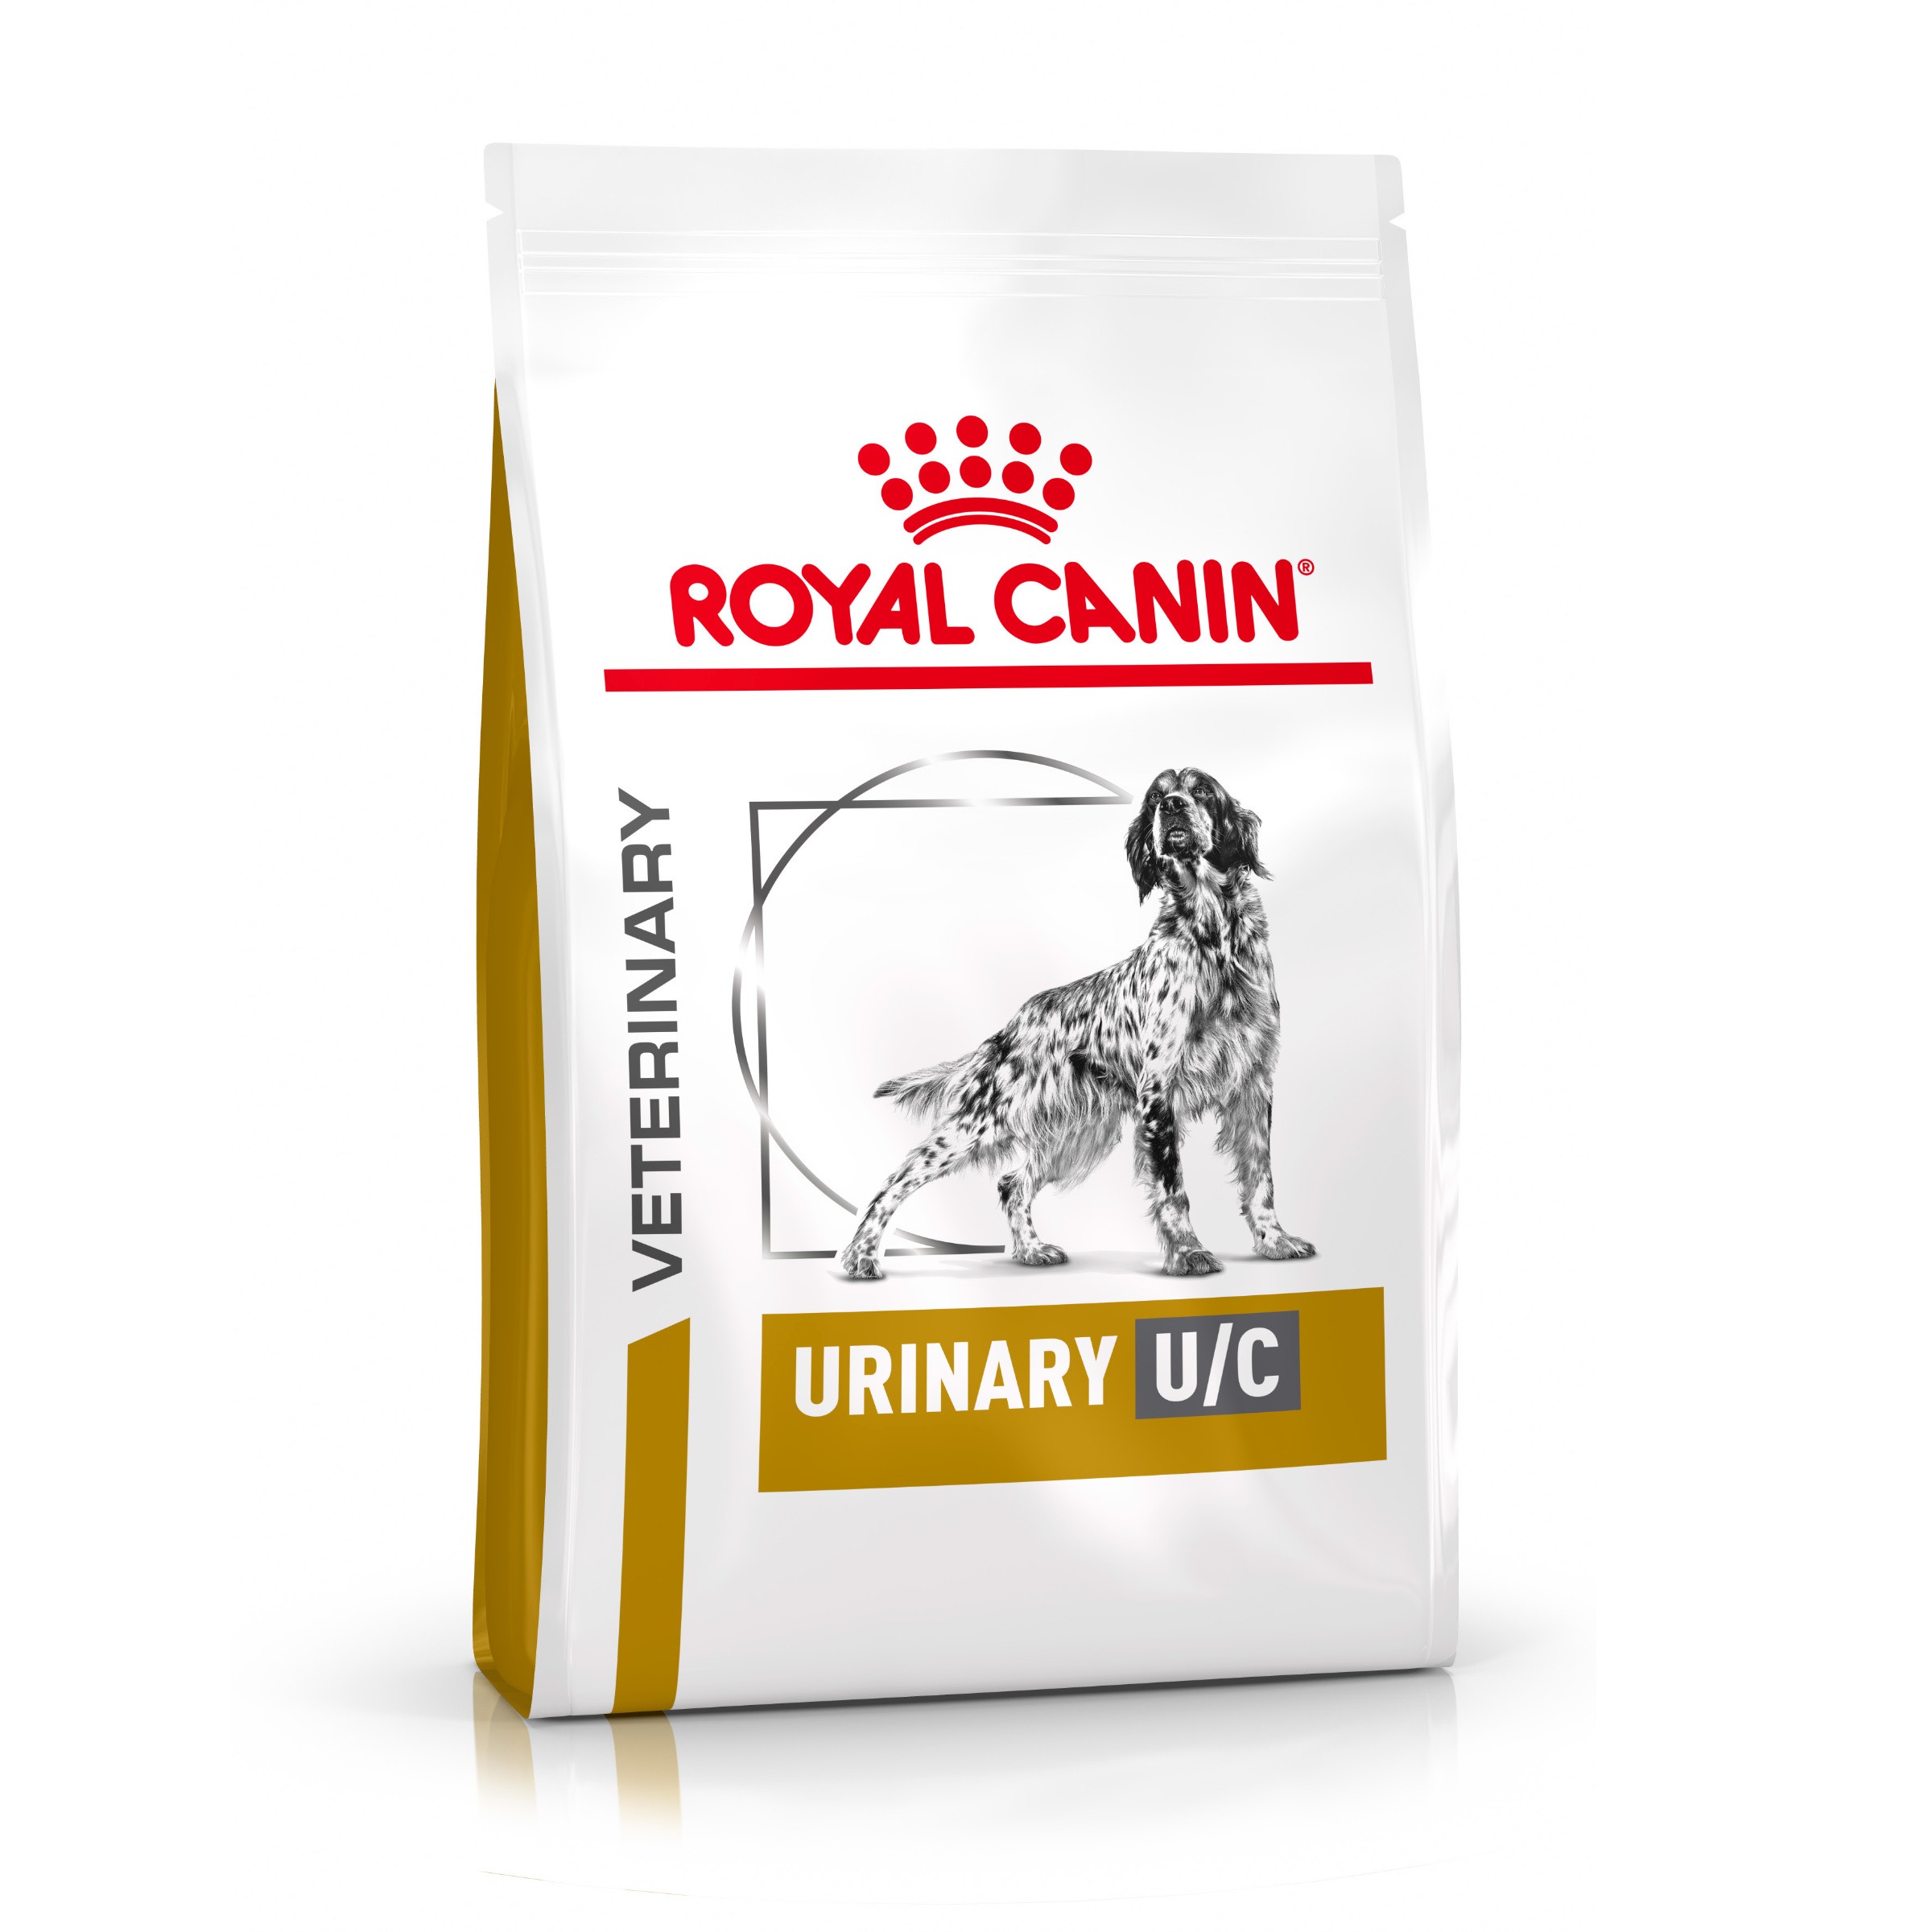 Royal Canin Veterinary Urinary U/C hondenvoer